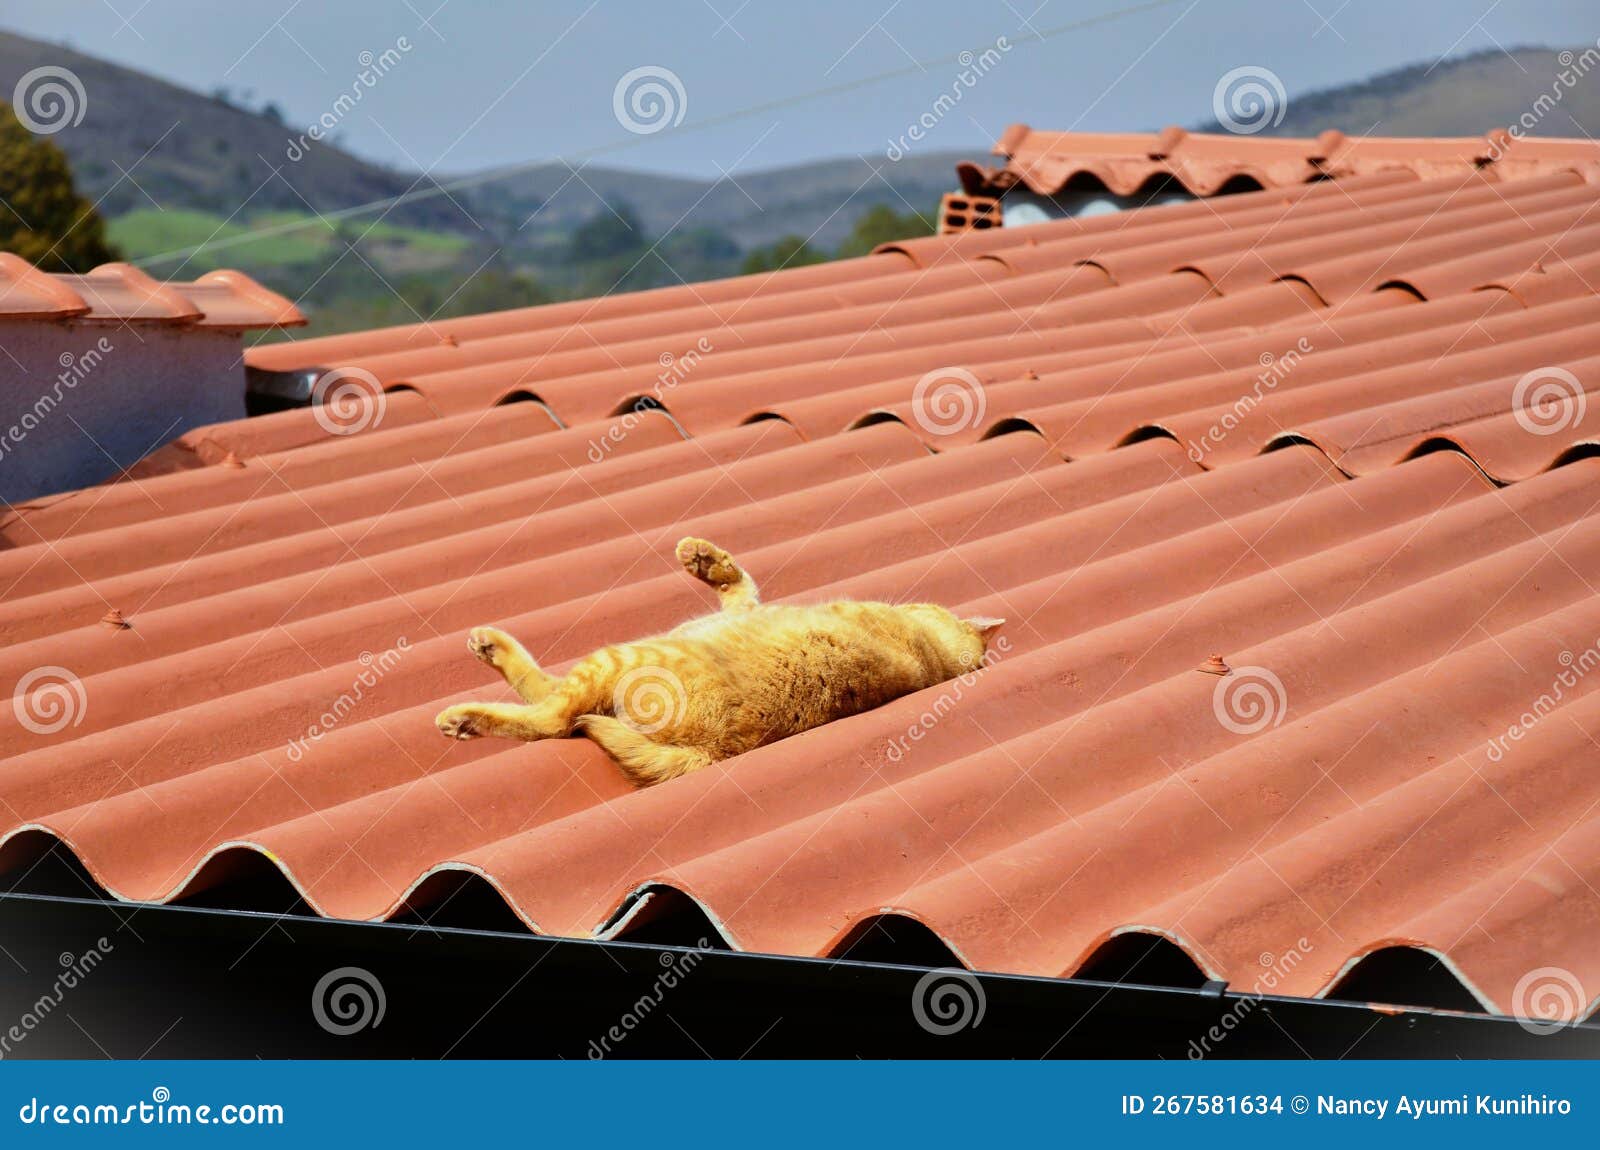 orange felis catus sleeping on top of roof in sunny day